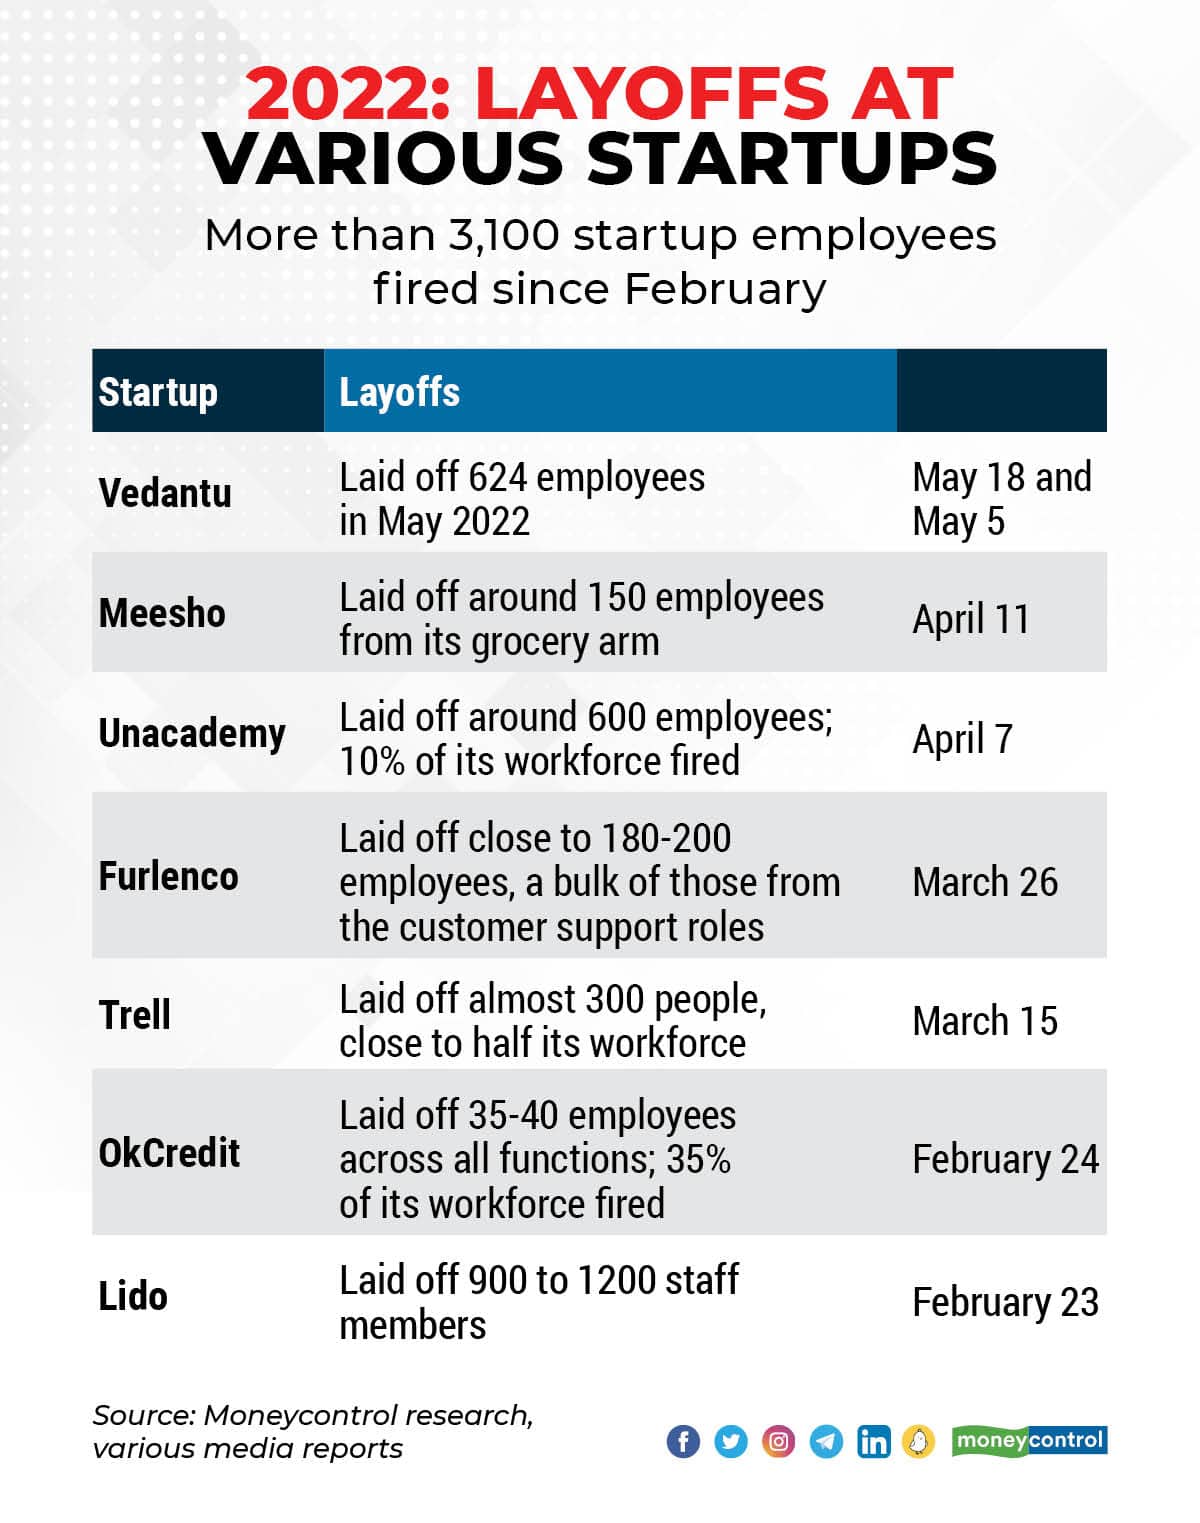 Layoffs by Indian startups in 2022 so far